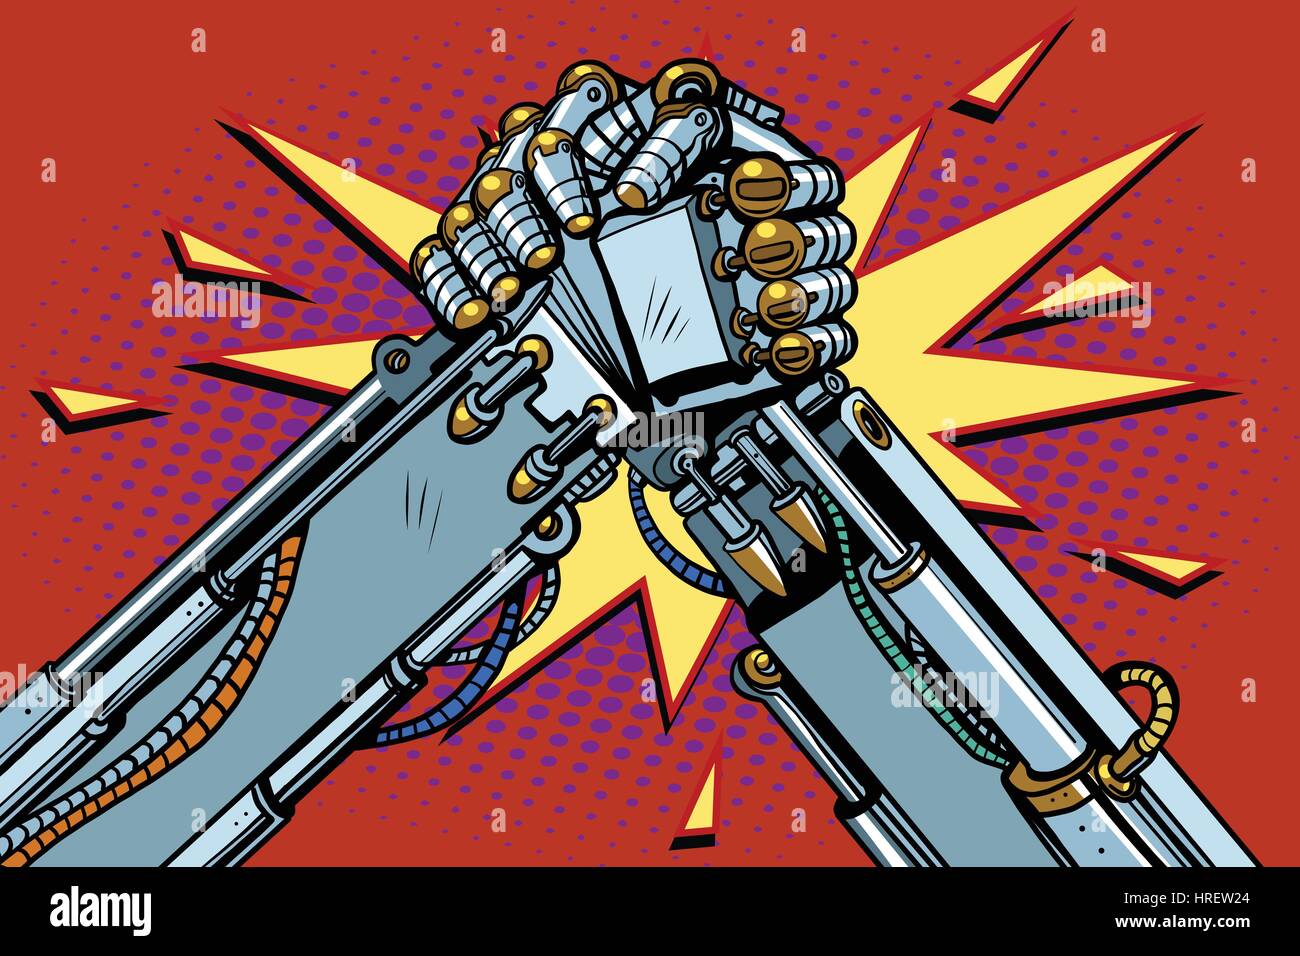 Fighting robots Arm wrestling fight confrontation, pop art retro vector illustration Stock Vector